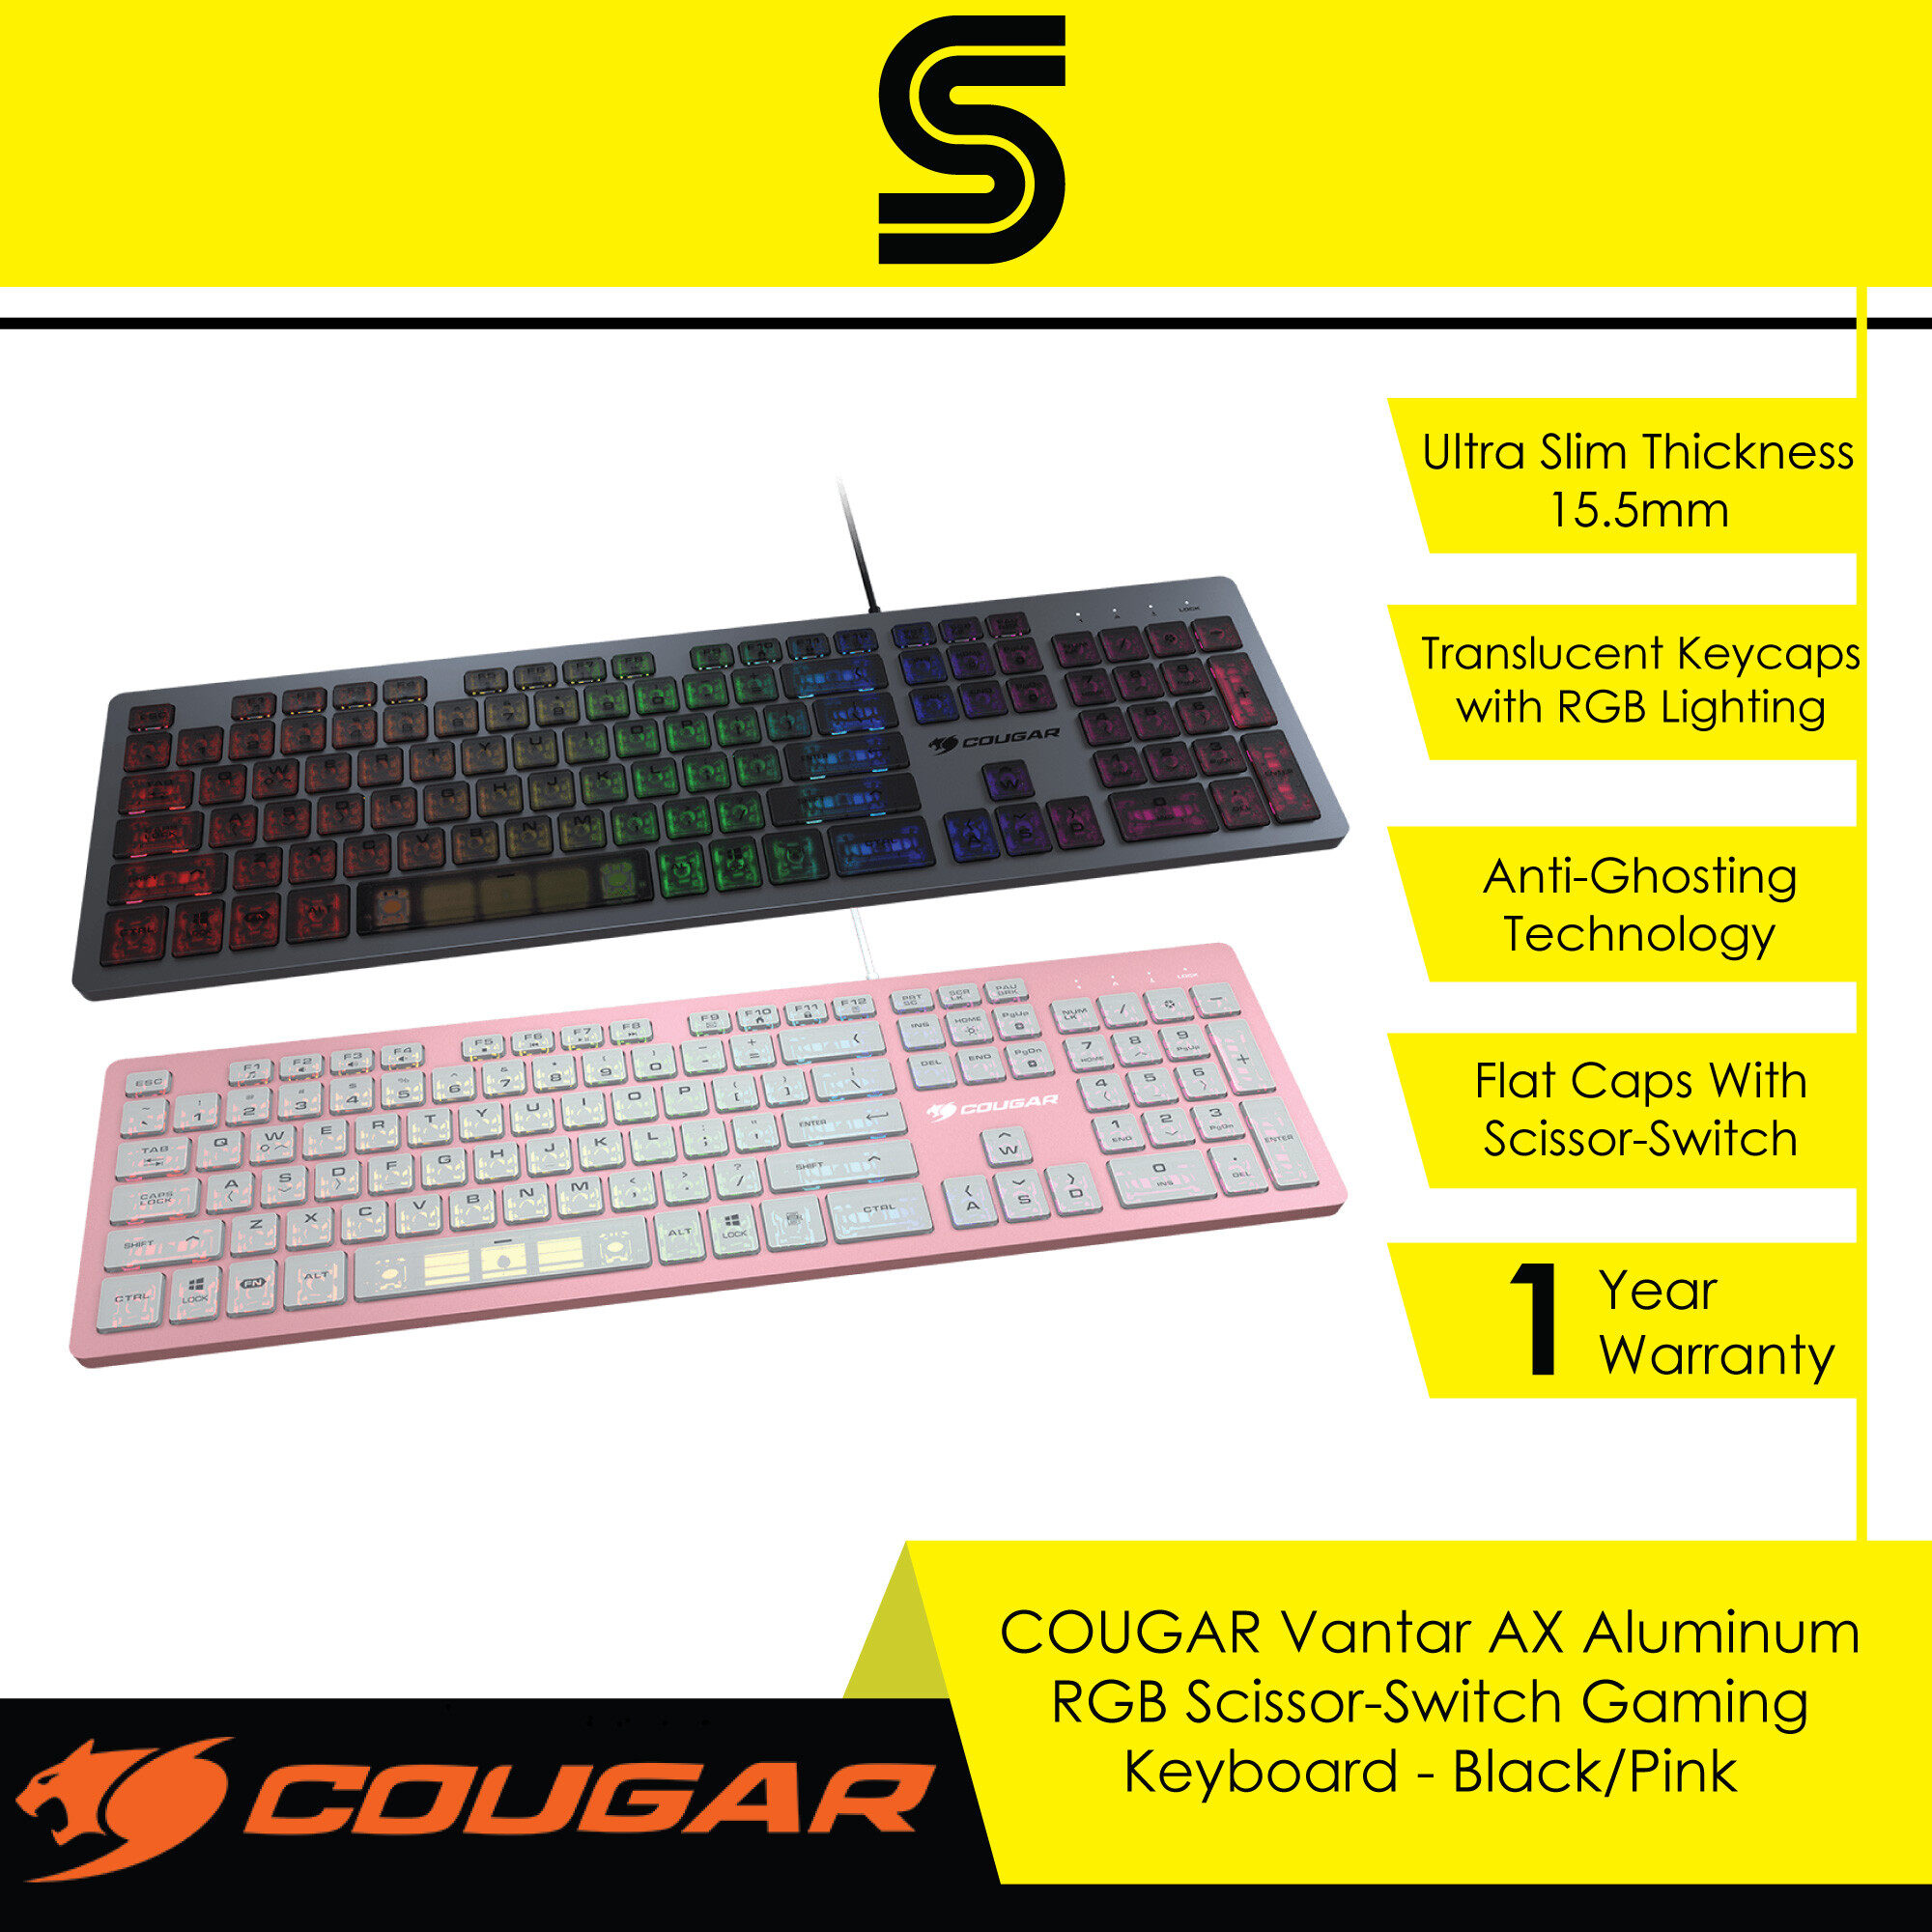 COUGAR Vantar AX Aluminum RGB Scissor-Switch Gaming Keyboard - Black/Pink